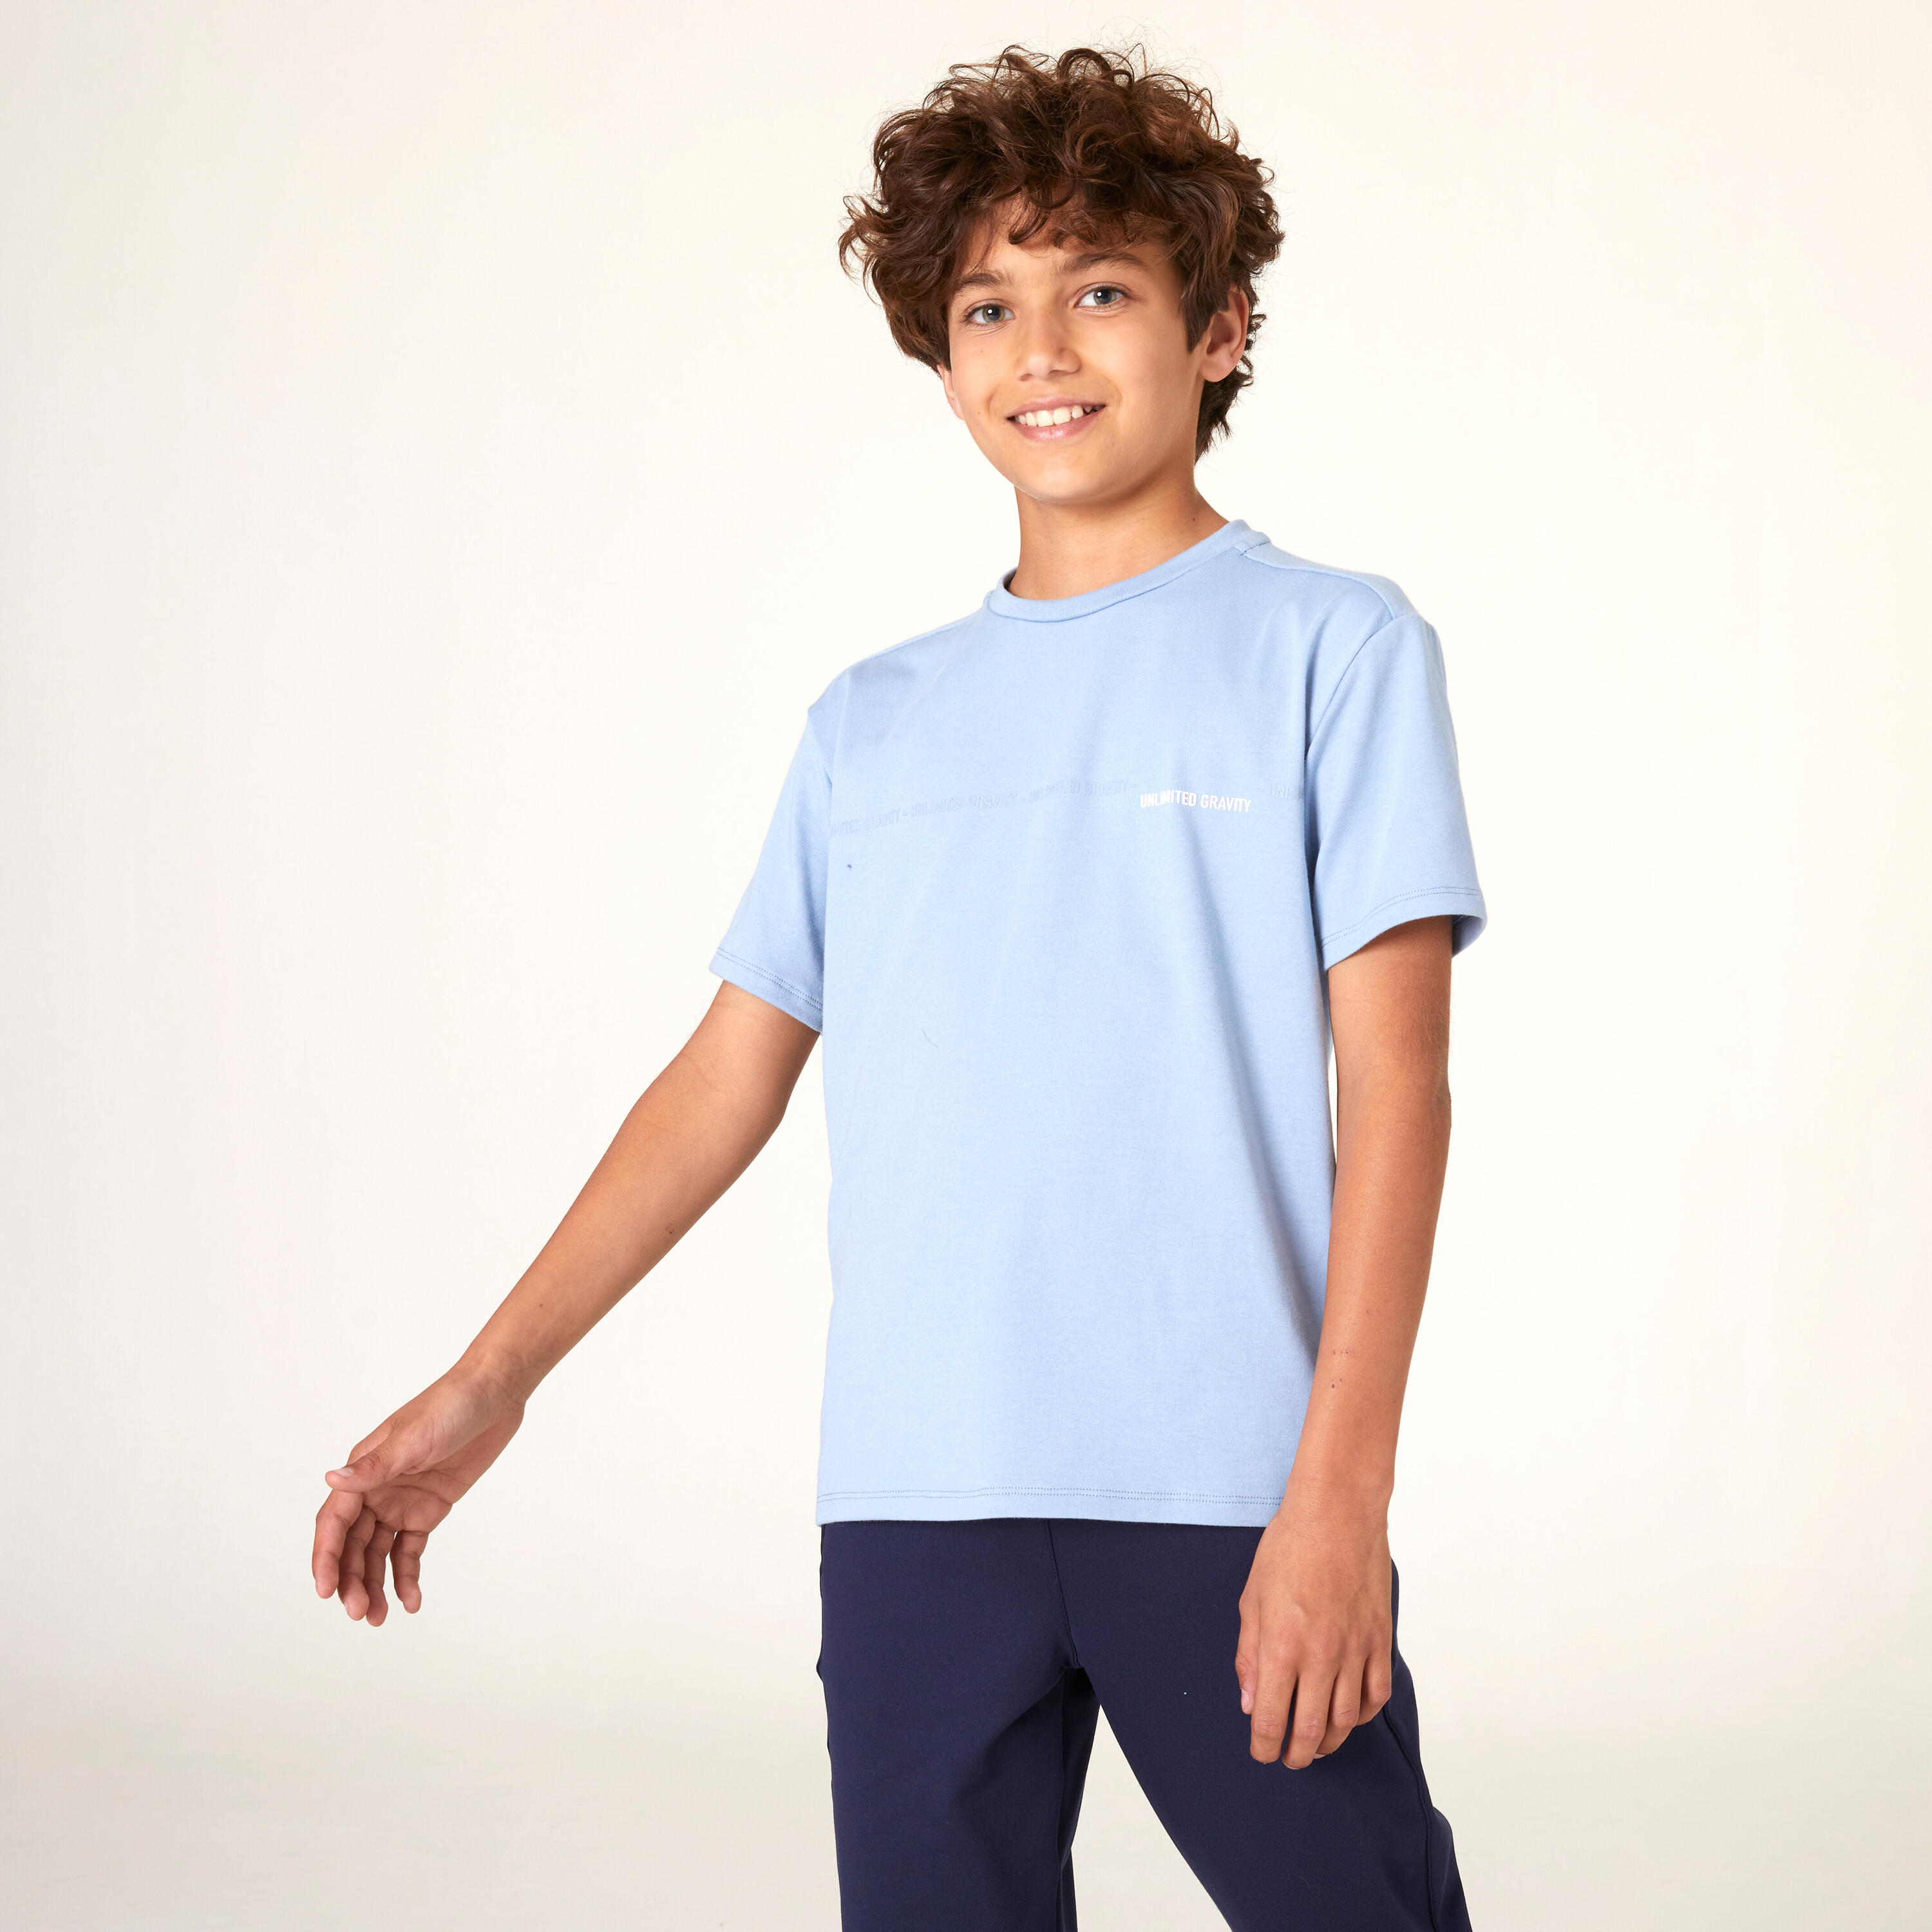 DOMYOS Kids' Breathable Cotton T-Shirt 500 - Blue Jeans